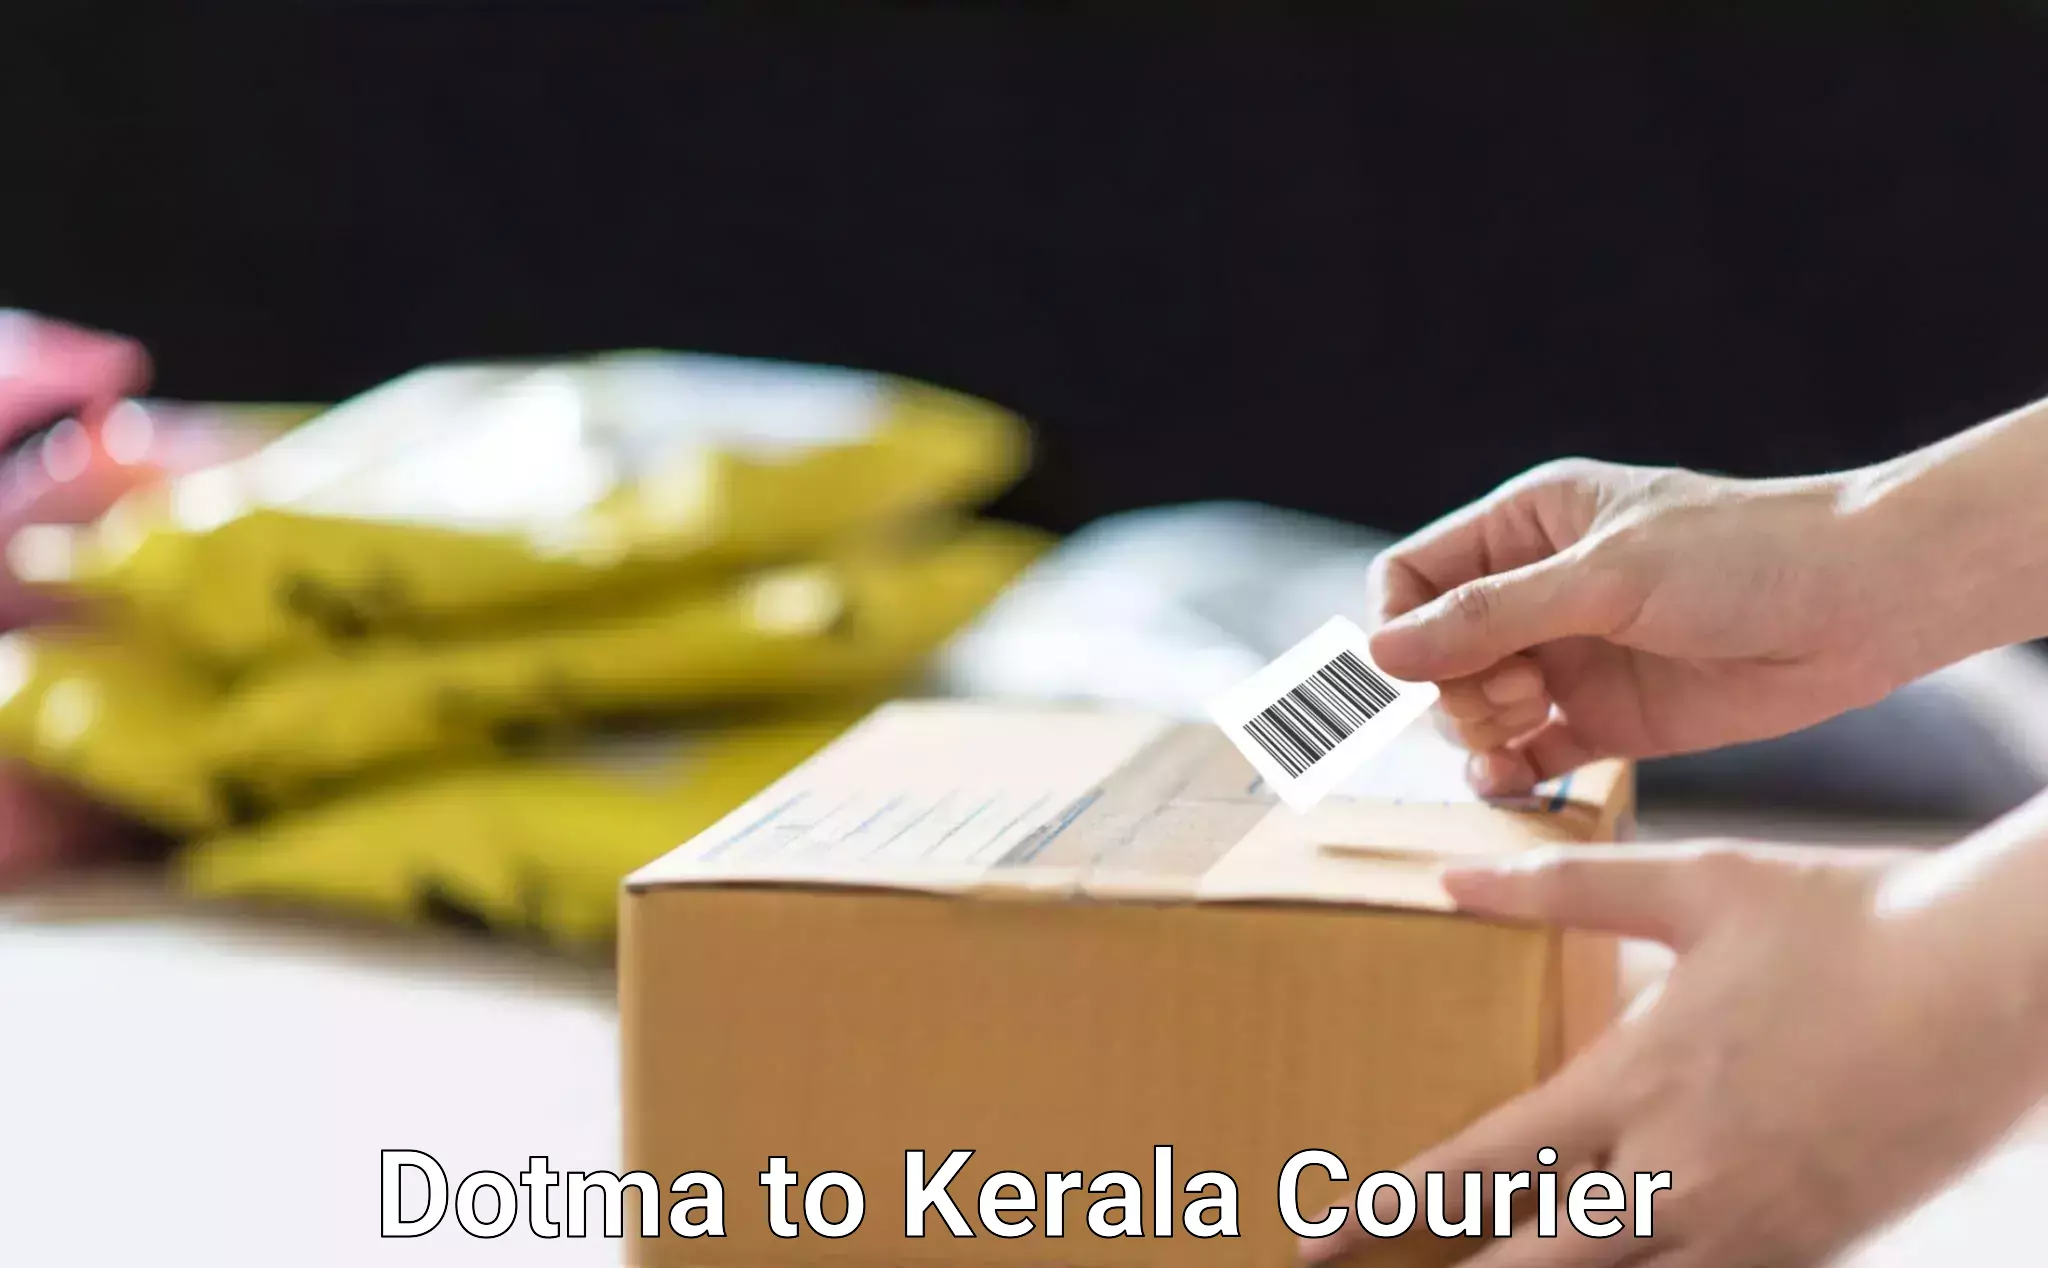 Efficient cargo handling Dotma to Kerala